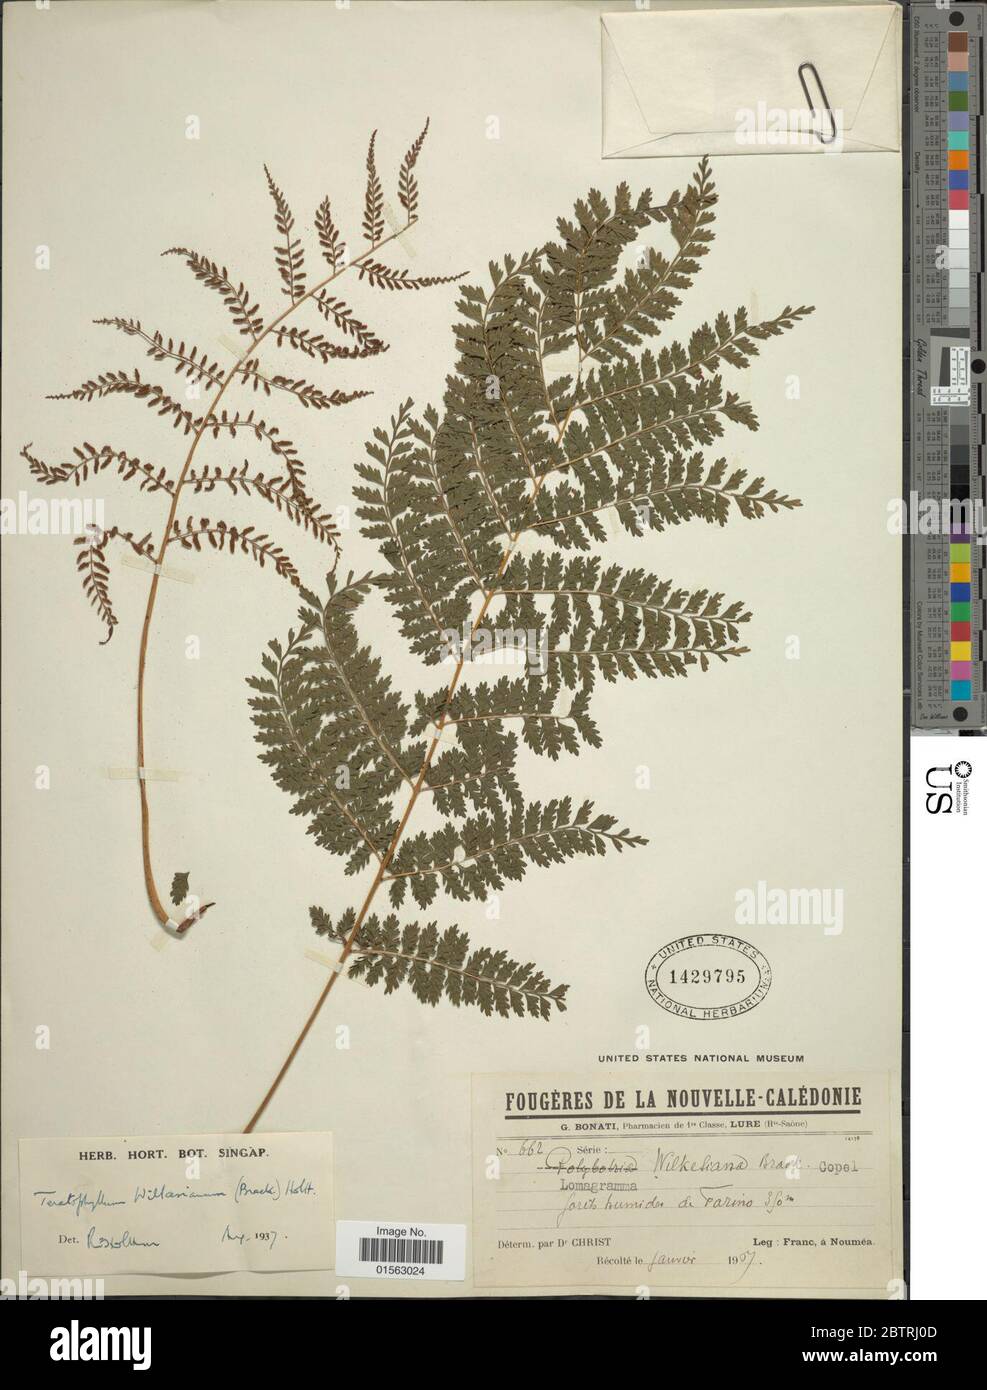 Teratophyllum wilkesianum Brack Holttum. Stock Photo